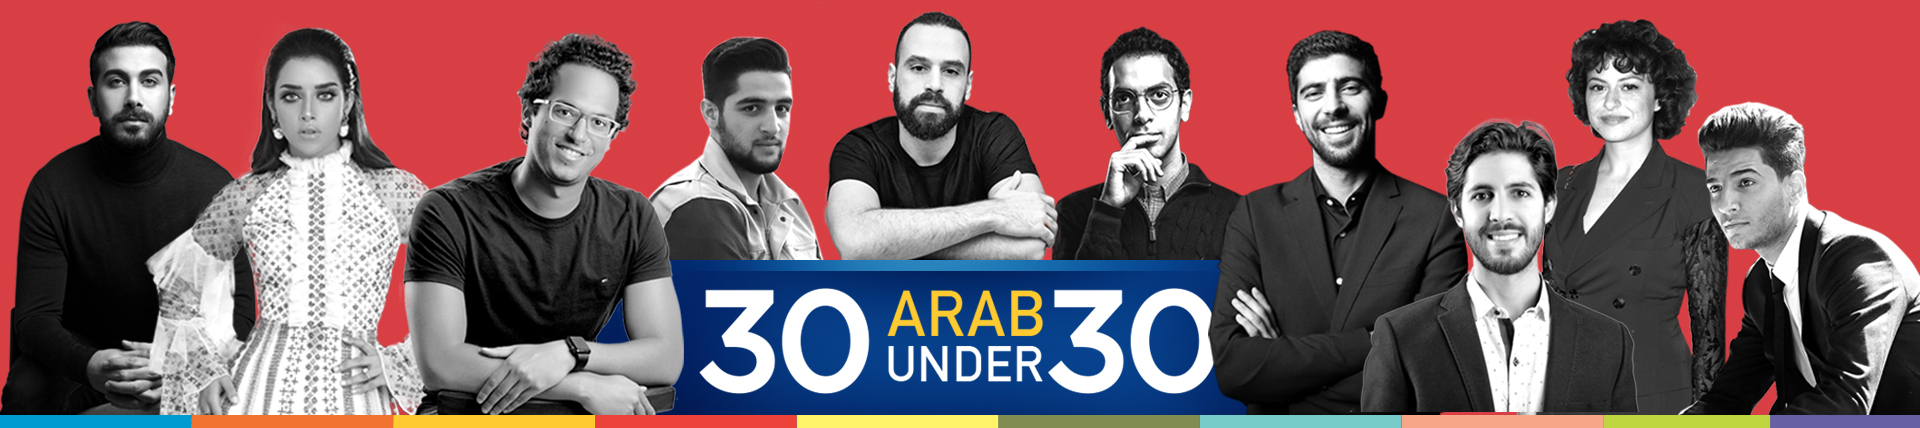 Arab 30 under 30